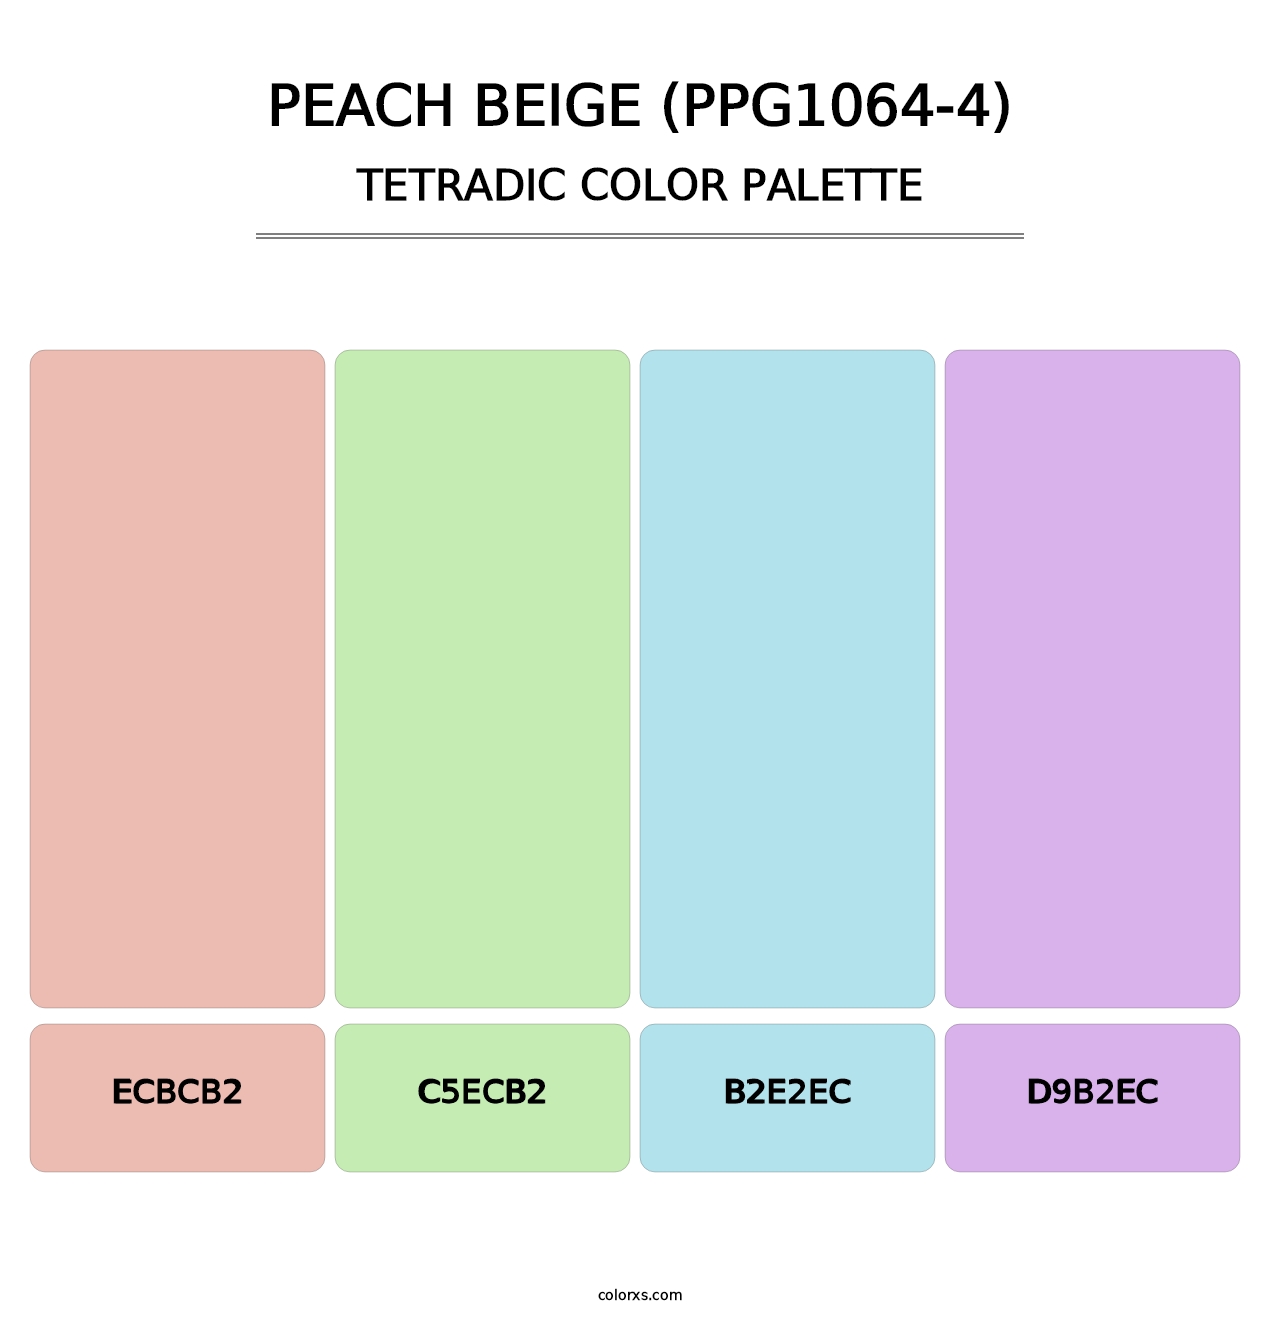 Peach Beige (PPG1064-4) - Tetradic Color Palette